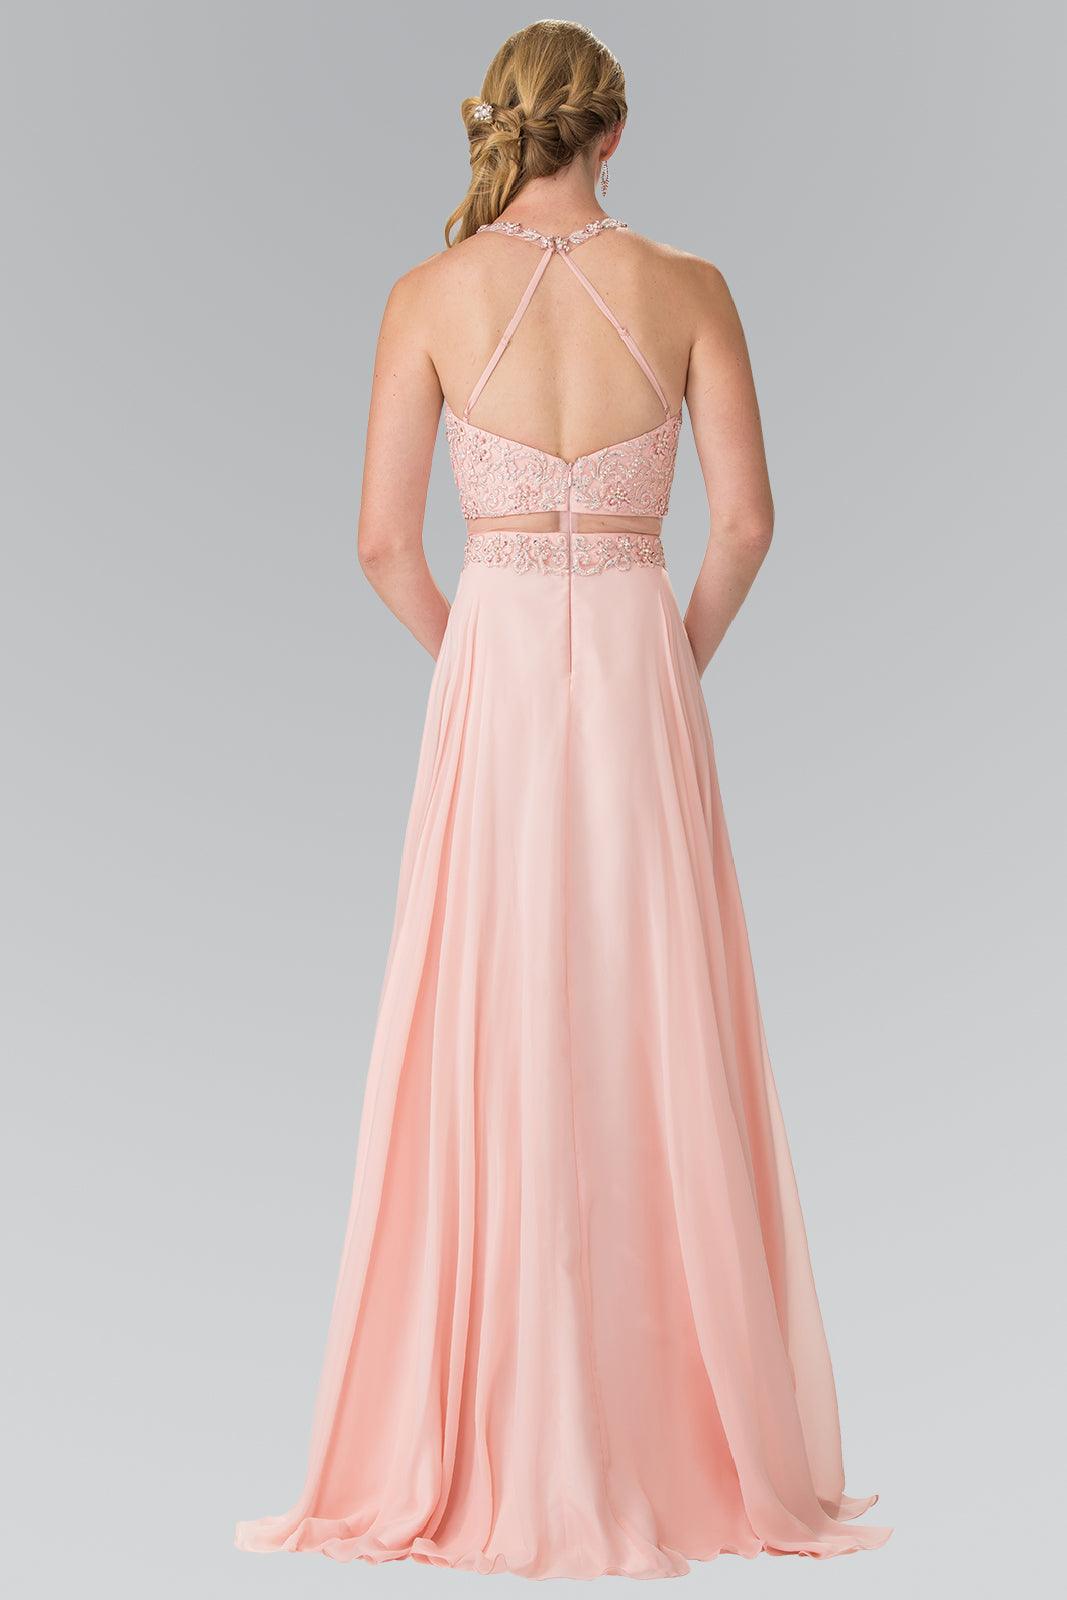 Long Formal Mock Two Piece Prom Dress - The Dress Outlet Elizabeth K